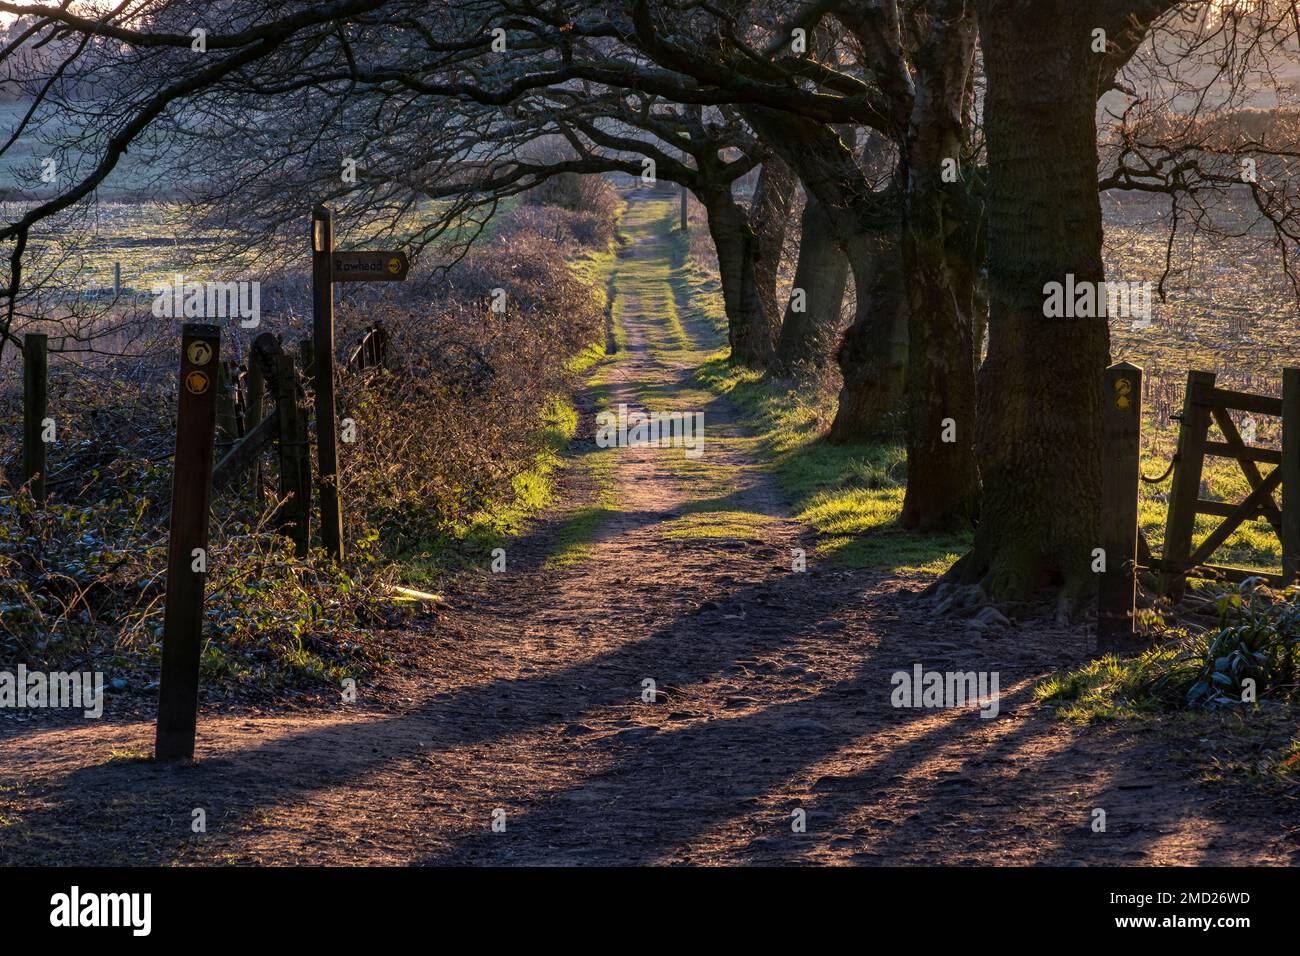 The Sandstone Trail, Bulkeley Hill Woods, Peckforton Hills, Cheshire, England, UK Stockfoto